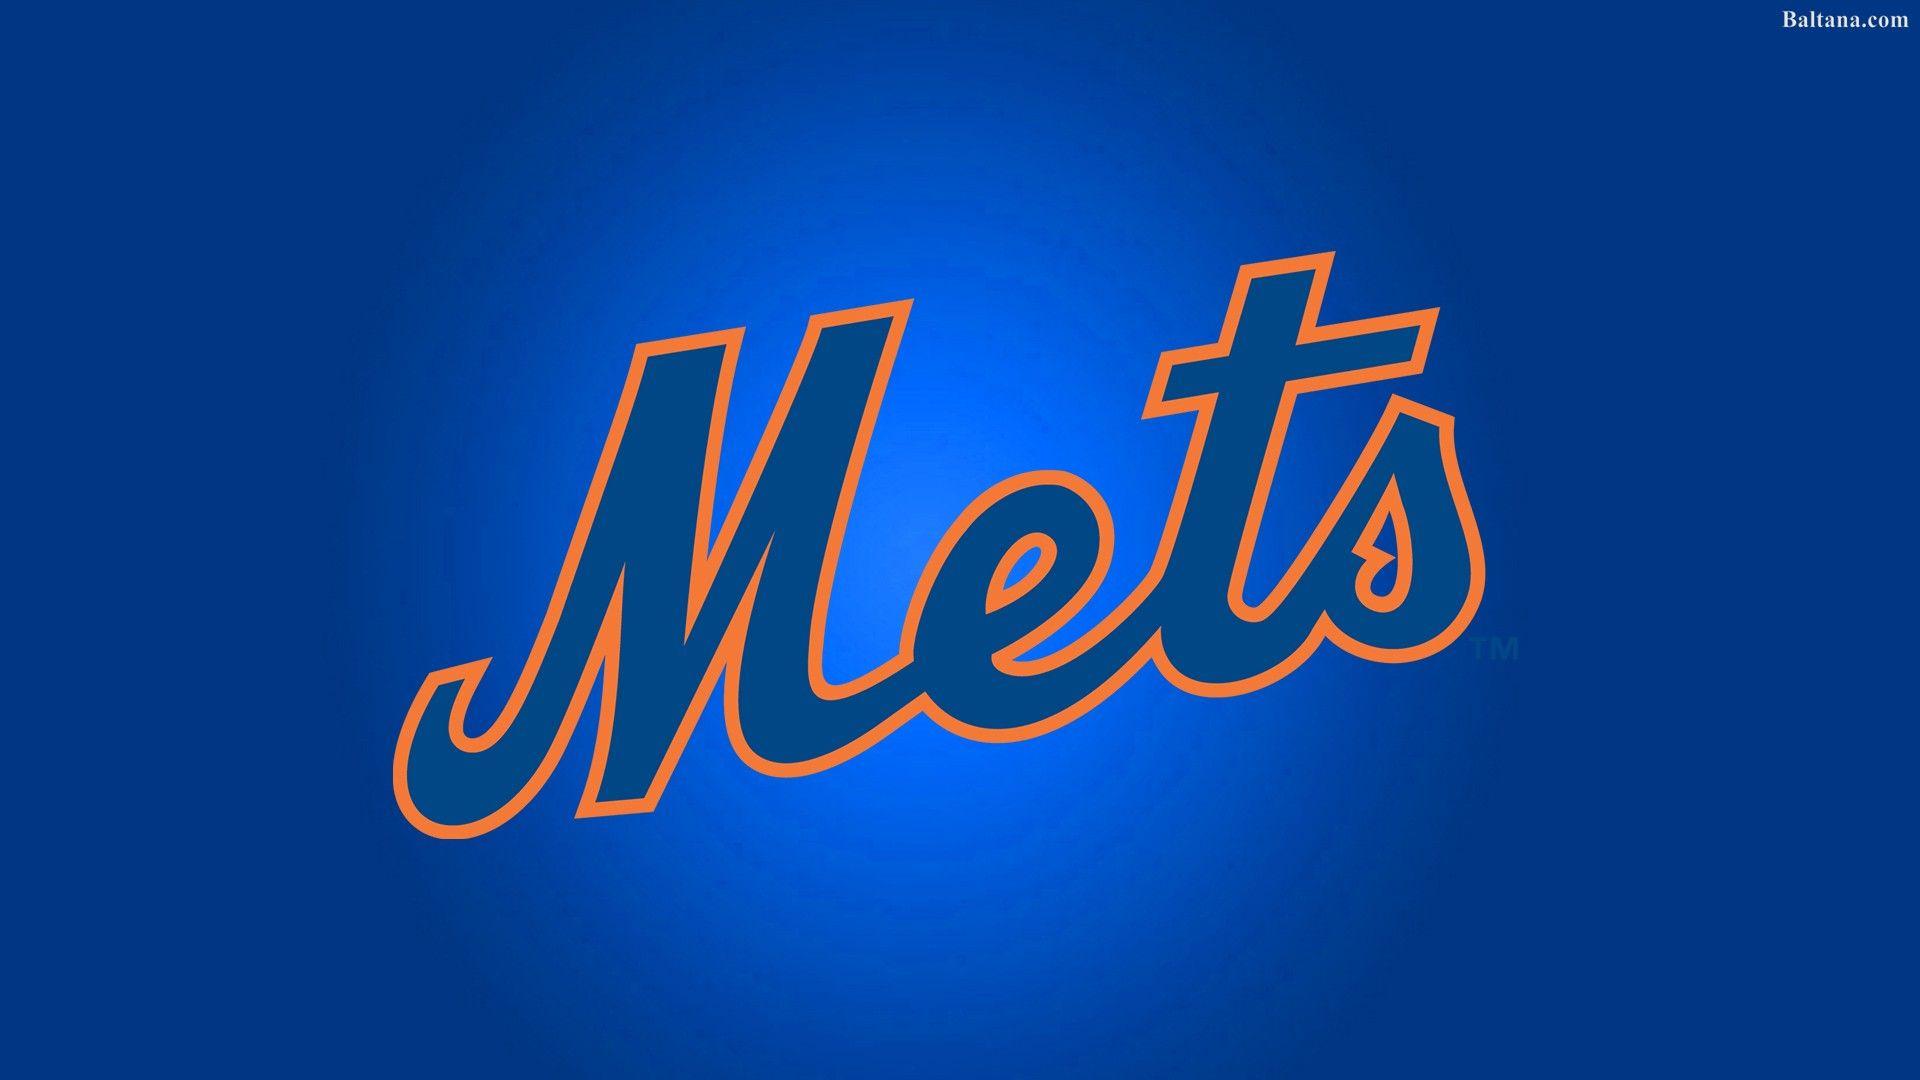 New York Mets Wallpapers - Top Free New York Mets Backgrounds ...